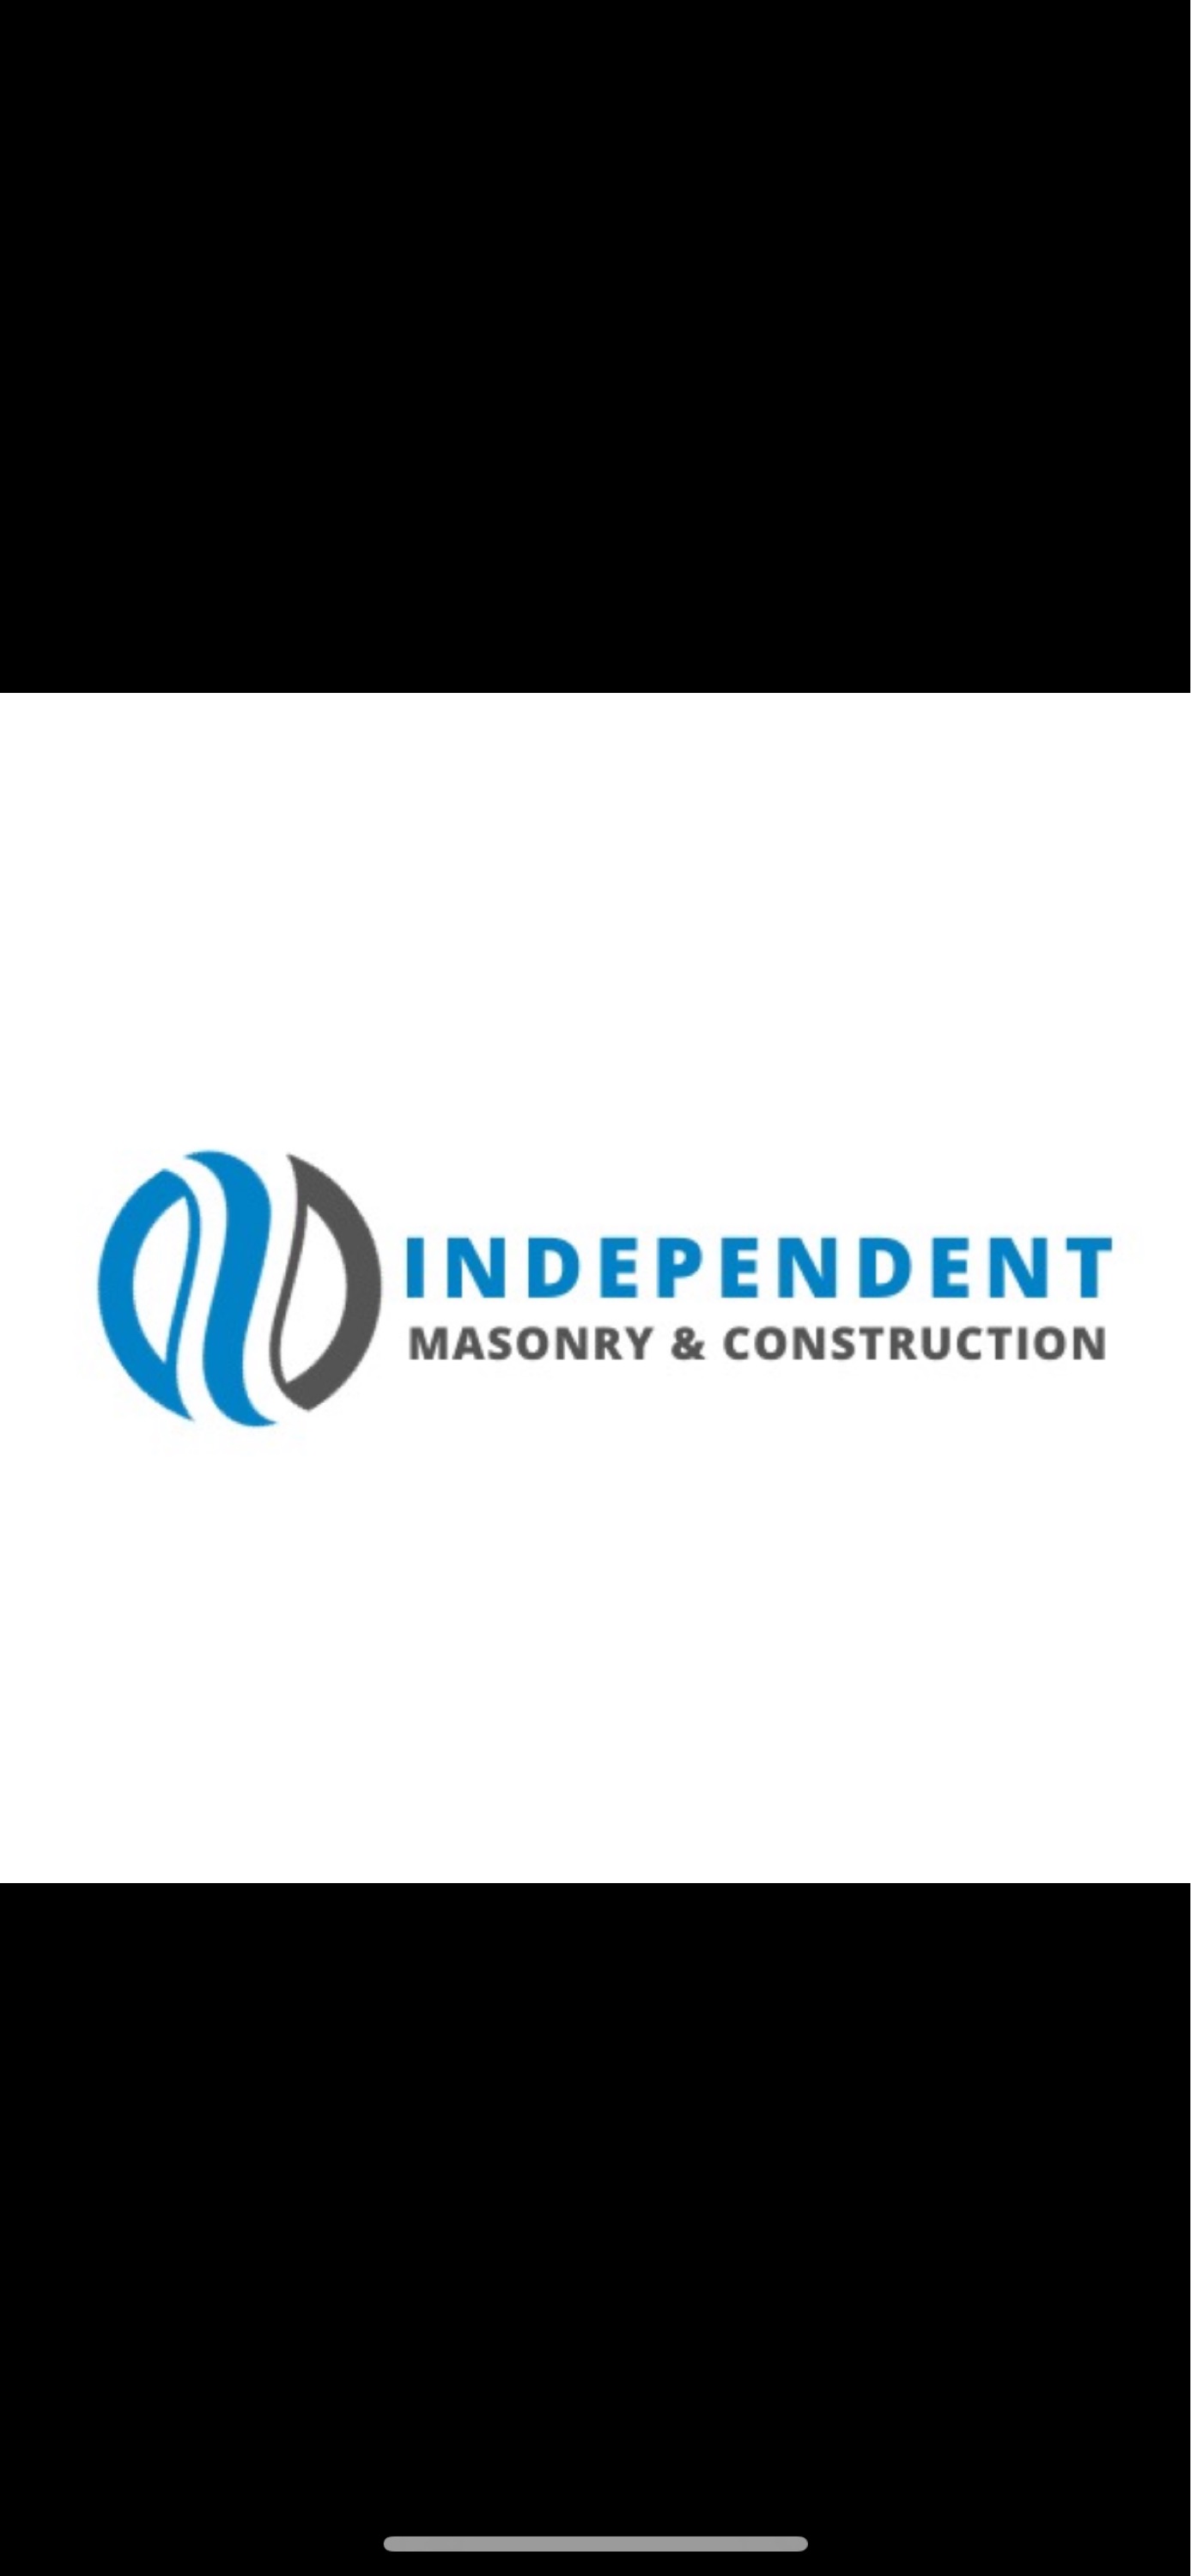 Independent Masonry and Construction Logo